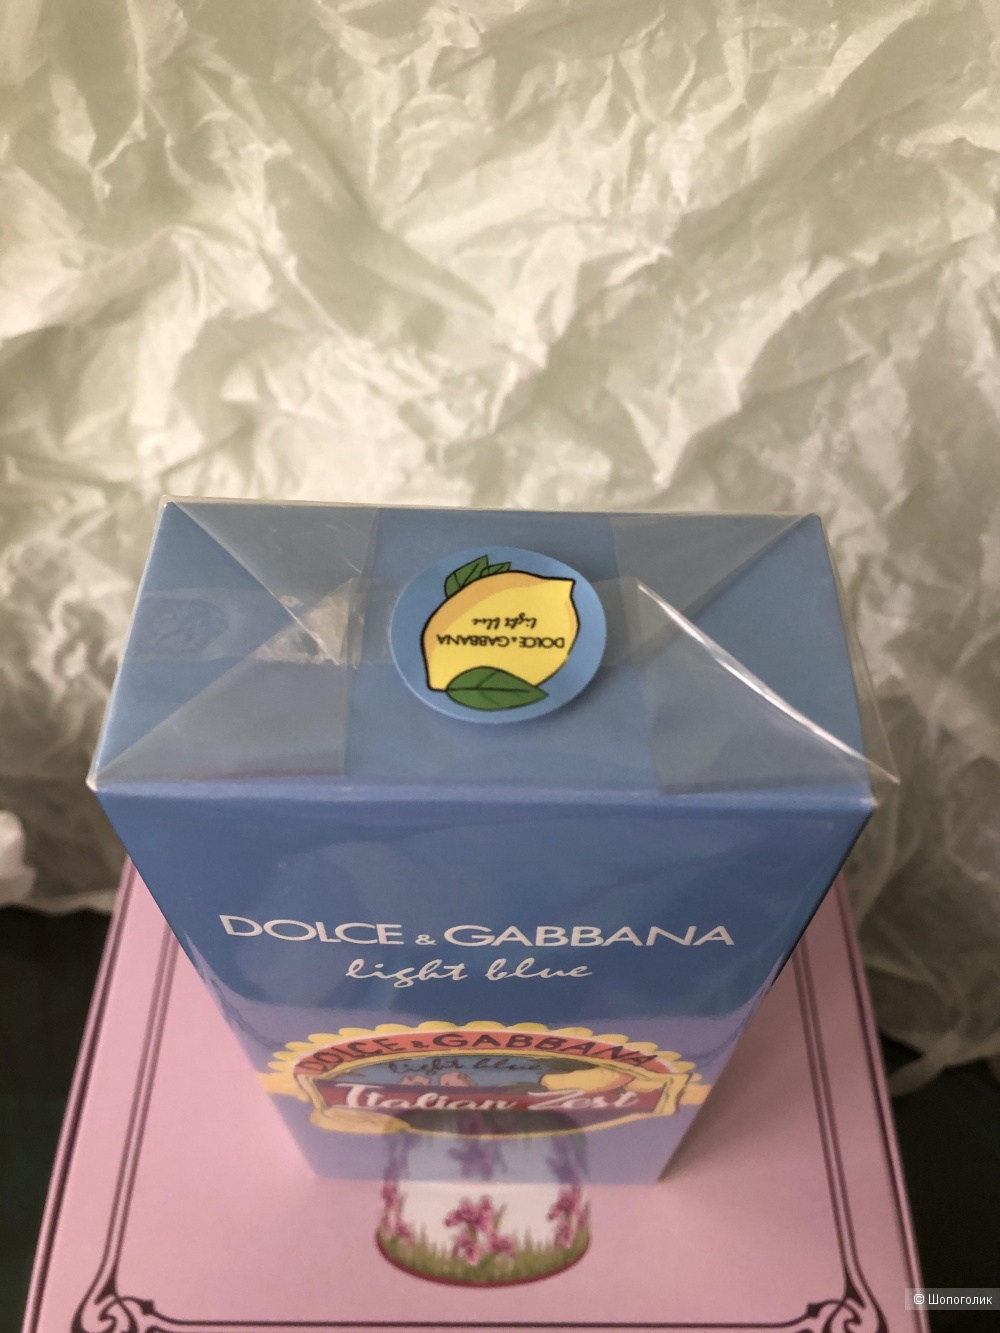 Туалетная вода Dolce&Gabbana Italian Zest, 100ml